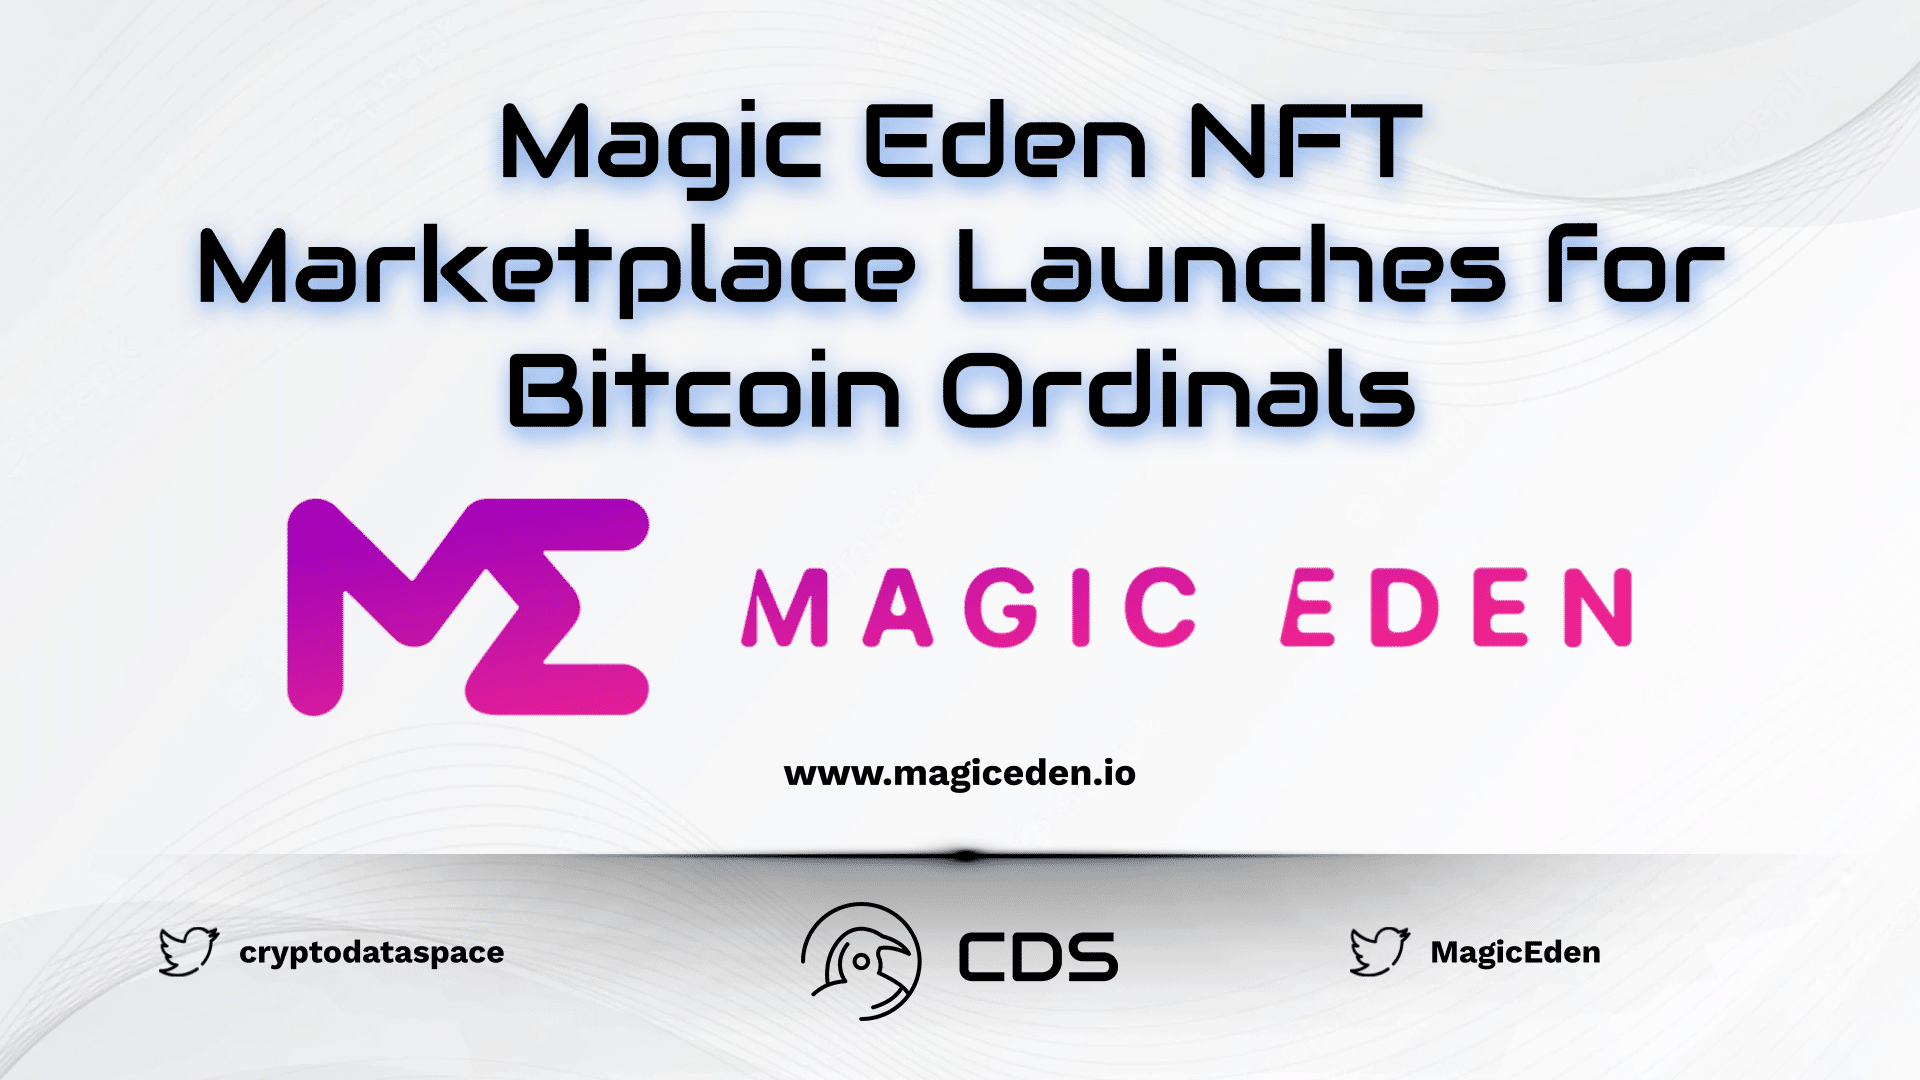 Magic Eden NFT Marketplace Launches for Bitcoin Ordinals